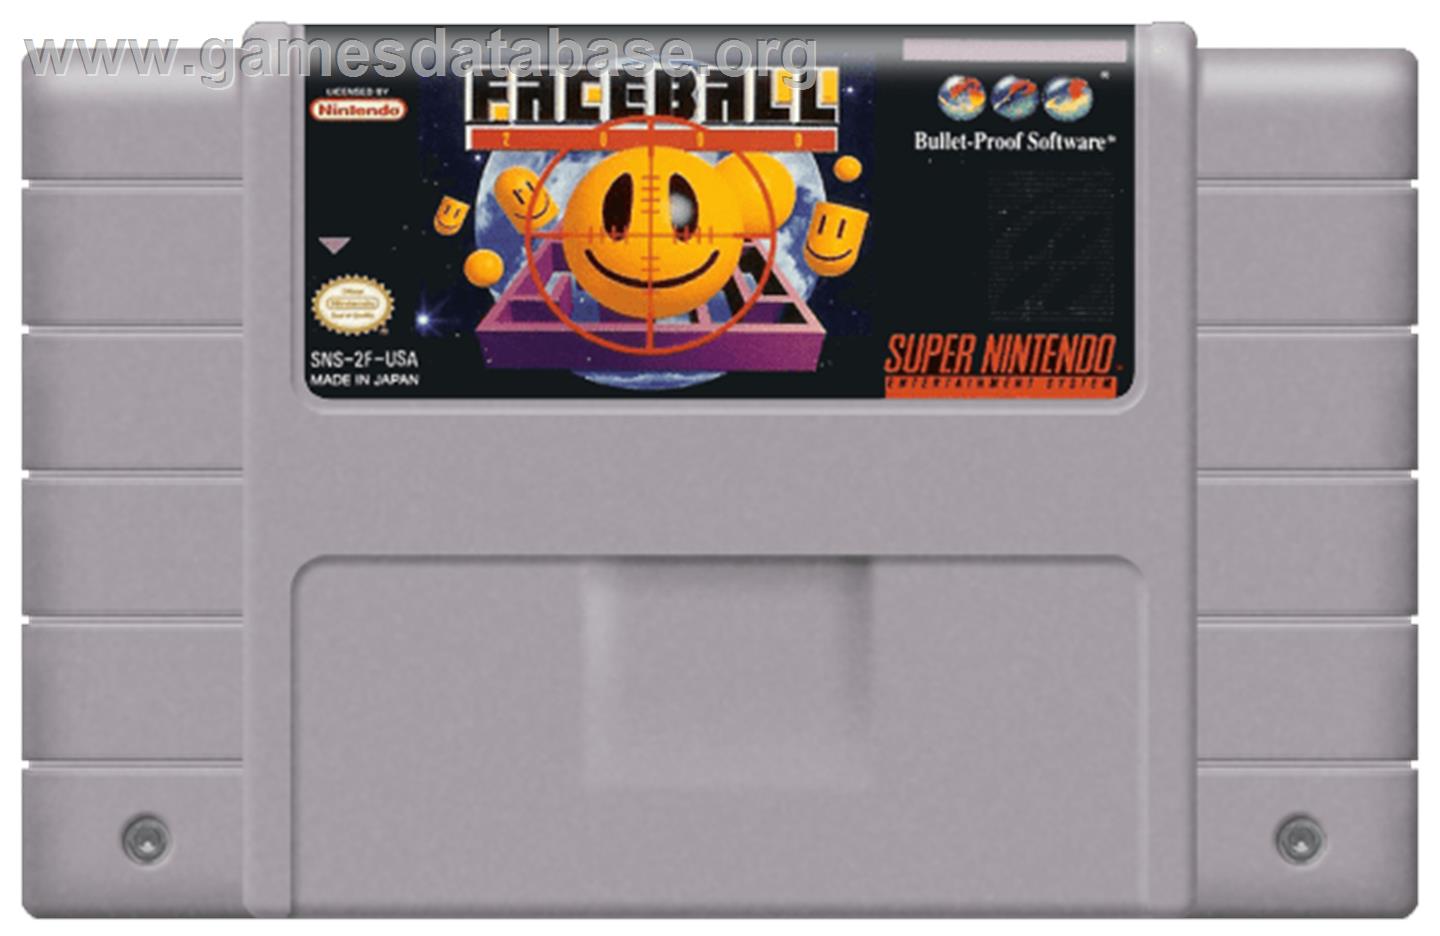 Faceball 2000 - Nintendo SNES - Artwork - Cartridge